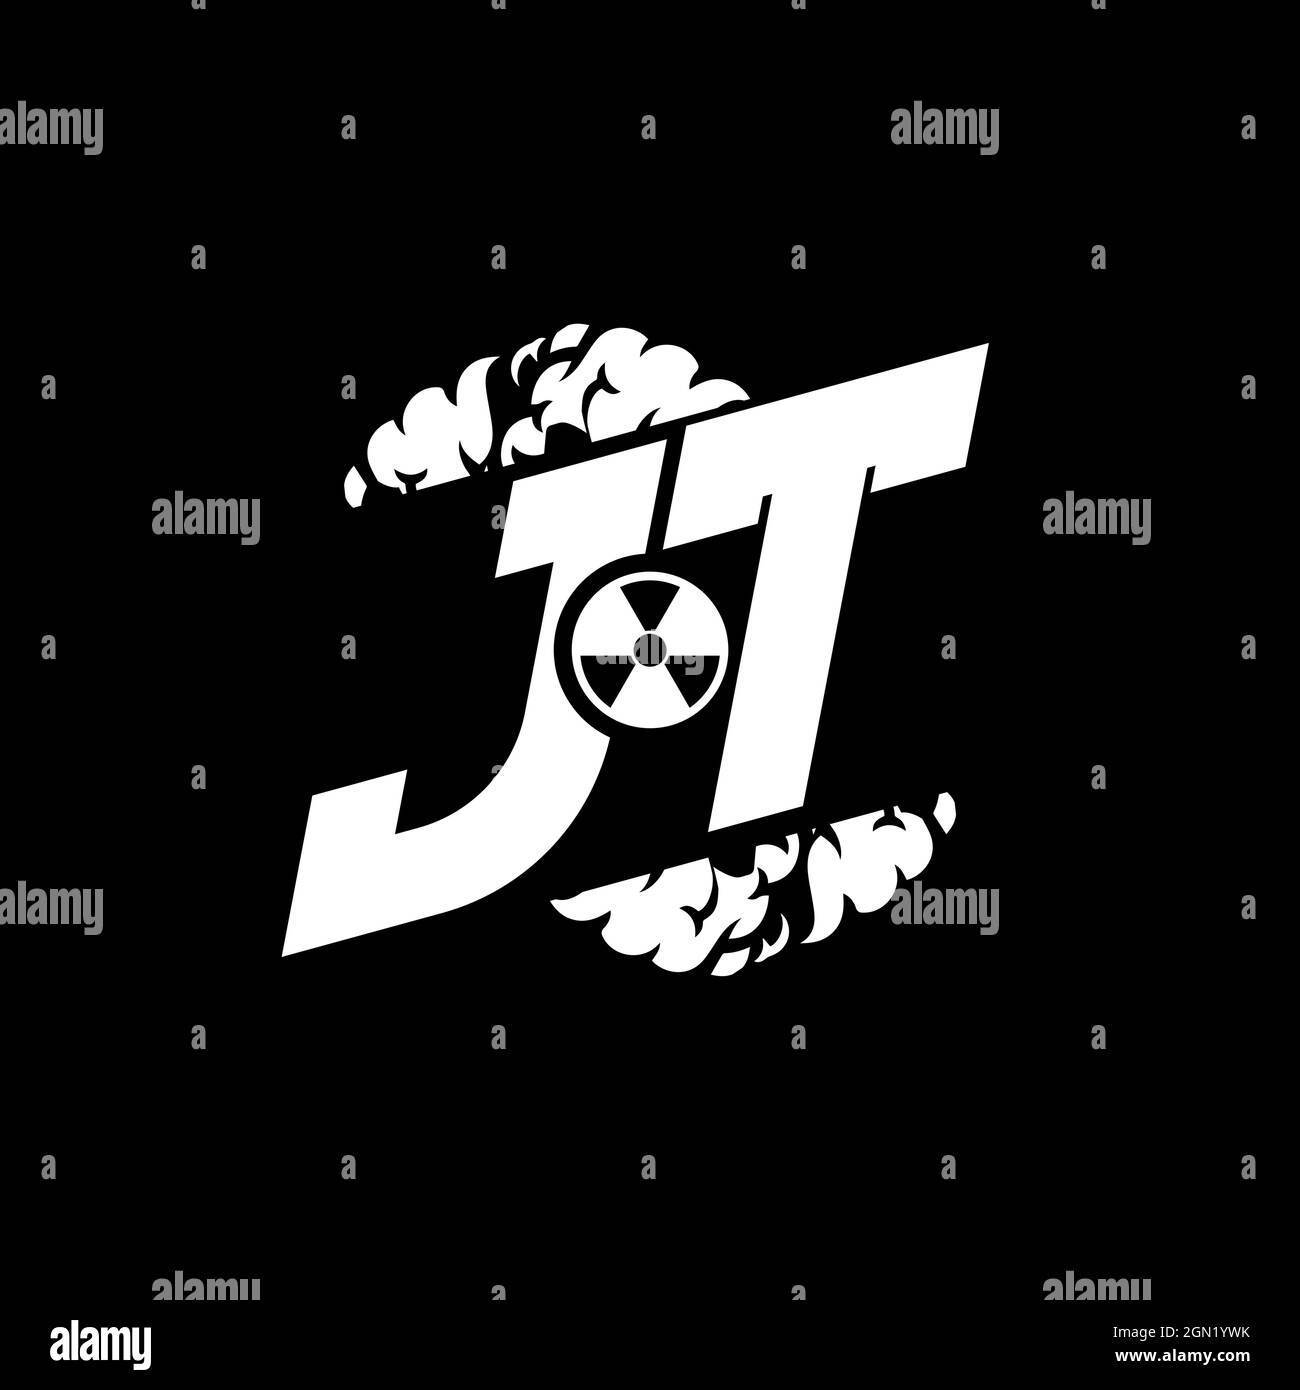 JT Initial eSport Monogramm mit Shape und Smoke Style Template Vektor Stock Vektor